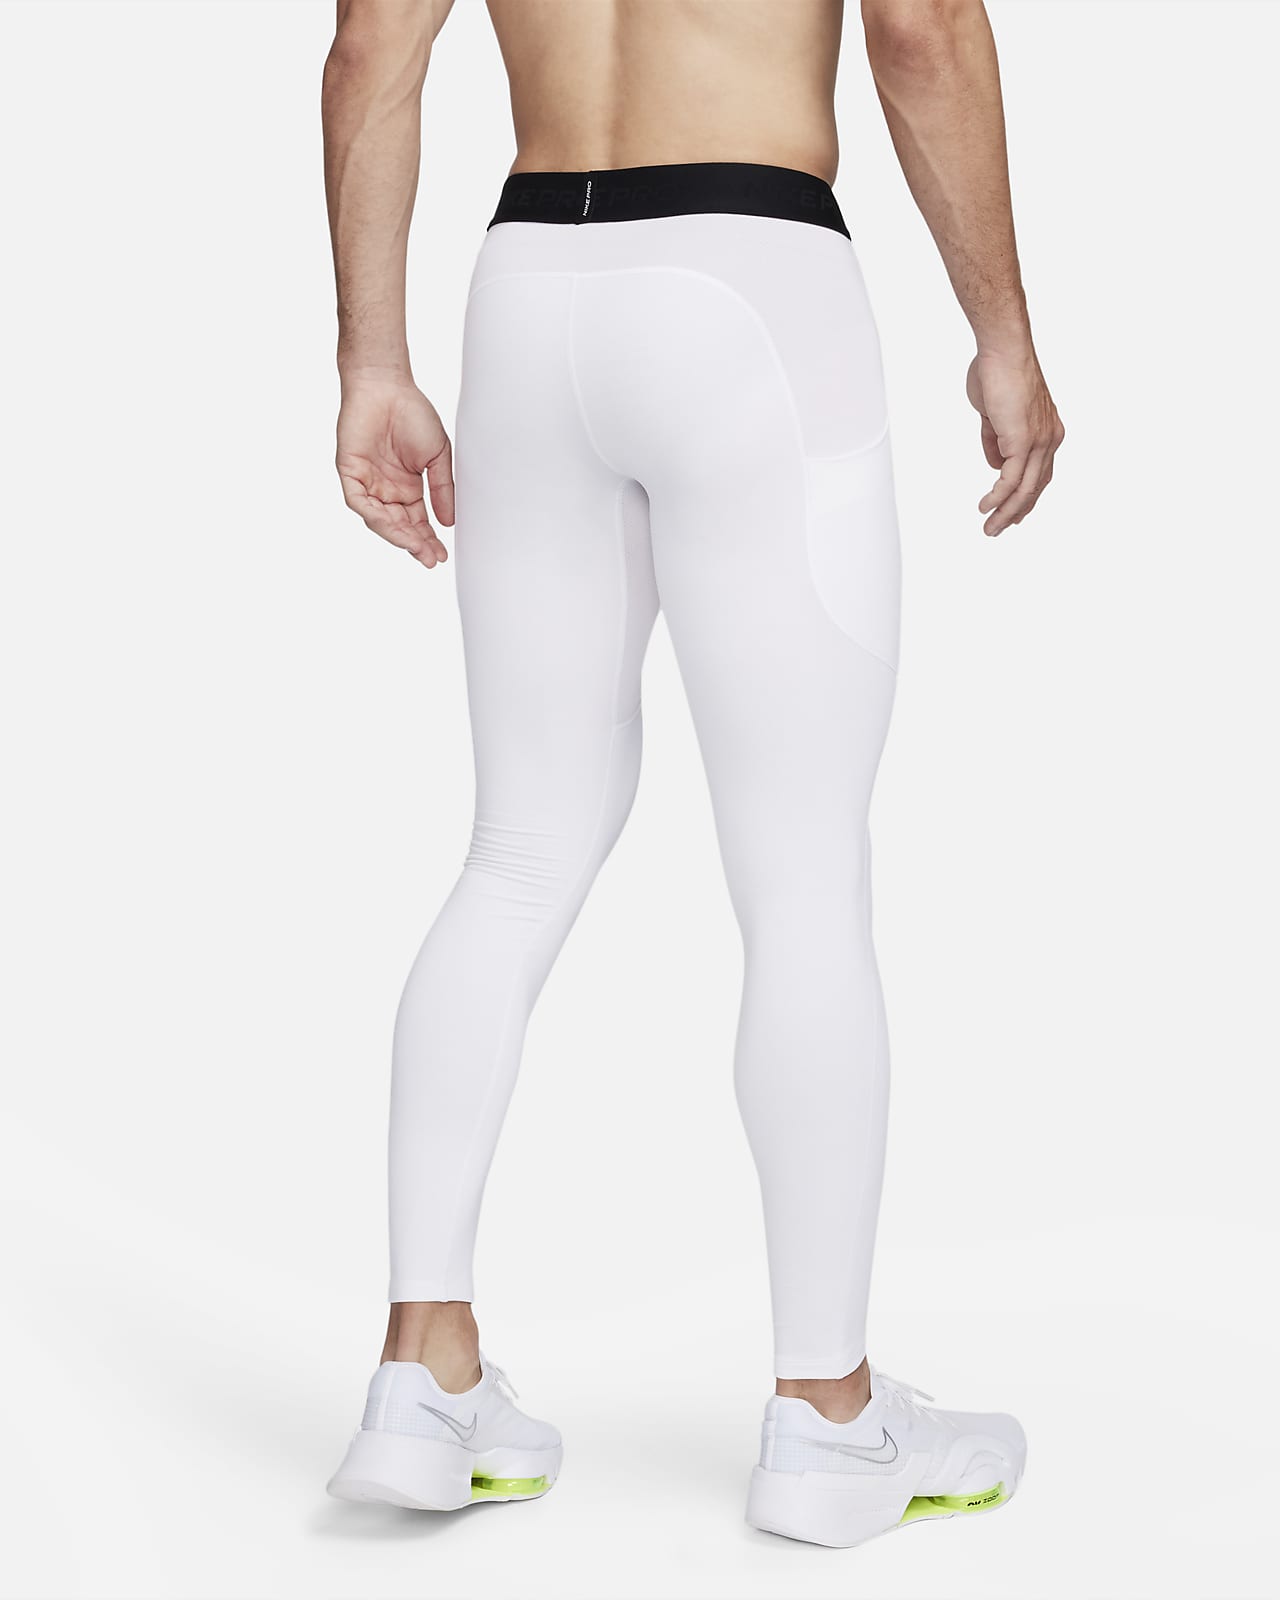 New Nike Women's Pro Hyperwarm Training Tights Small White/Black